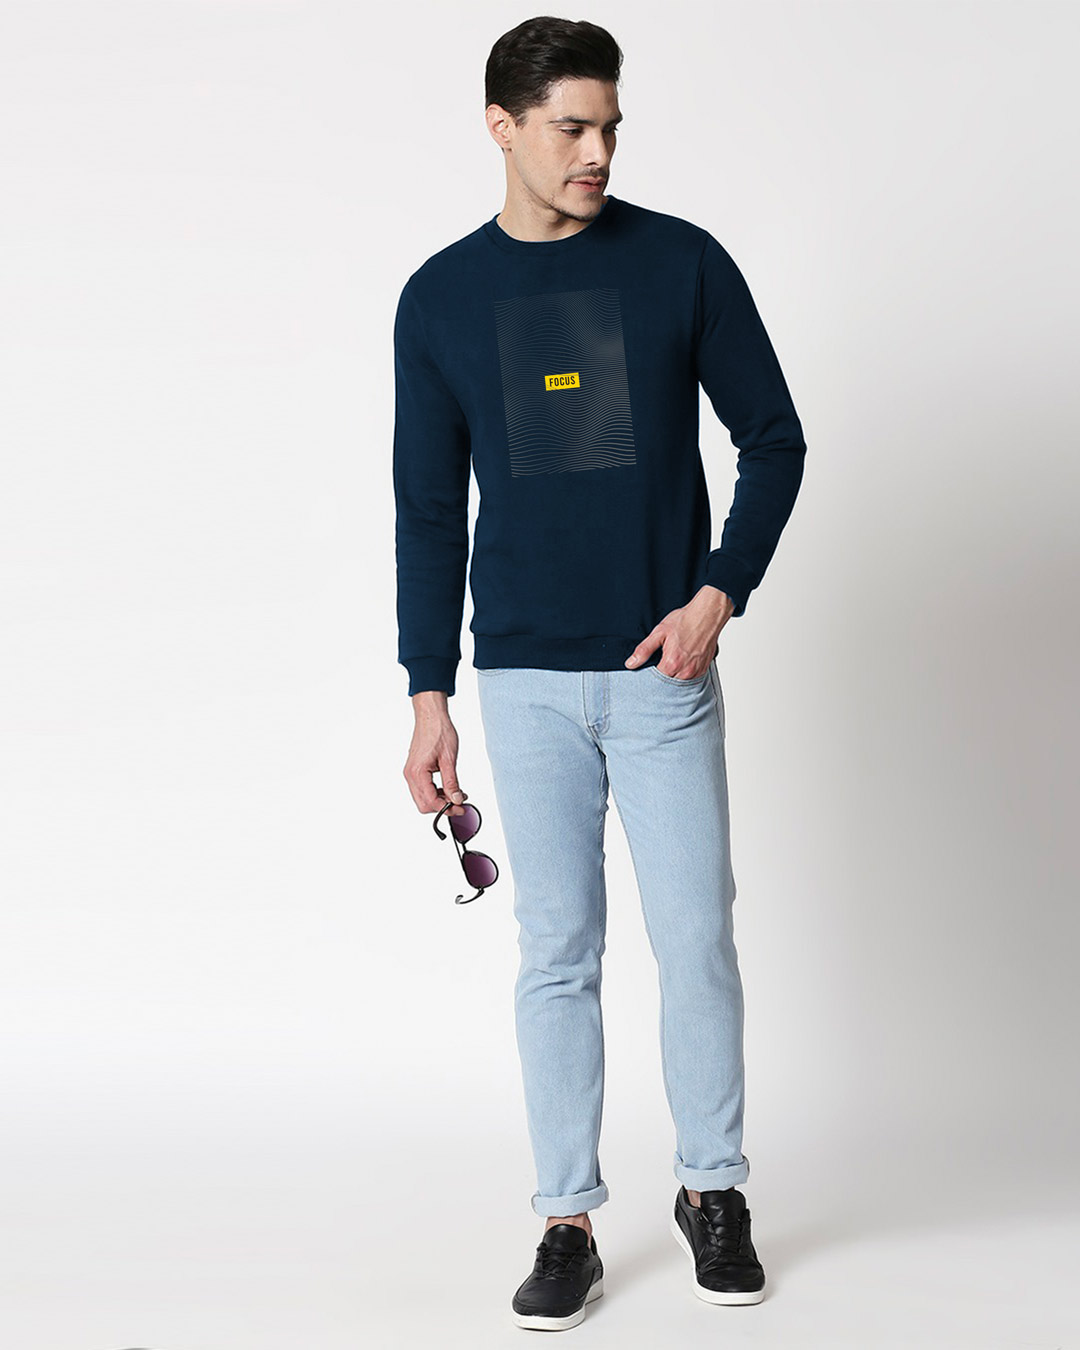 Shop Focus Abstract Fleece Sweatshirt Navy Blue-Back